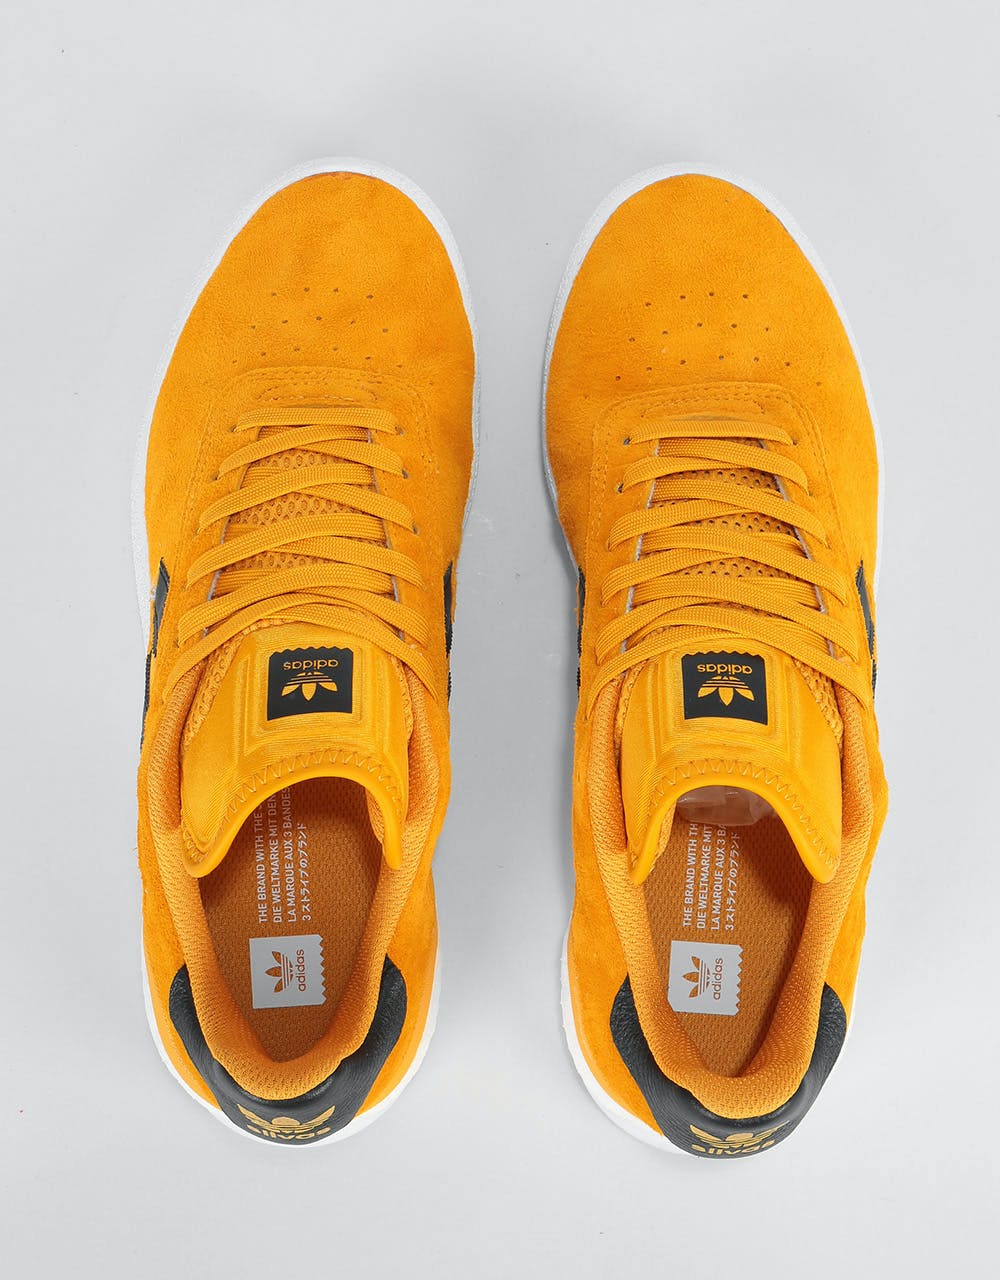 Adidas 3ST.004 Skate Shoes - Tactile Yellow/Core Black/Gold Metallic